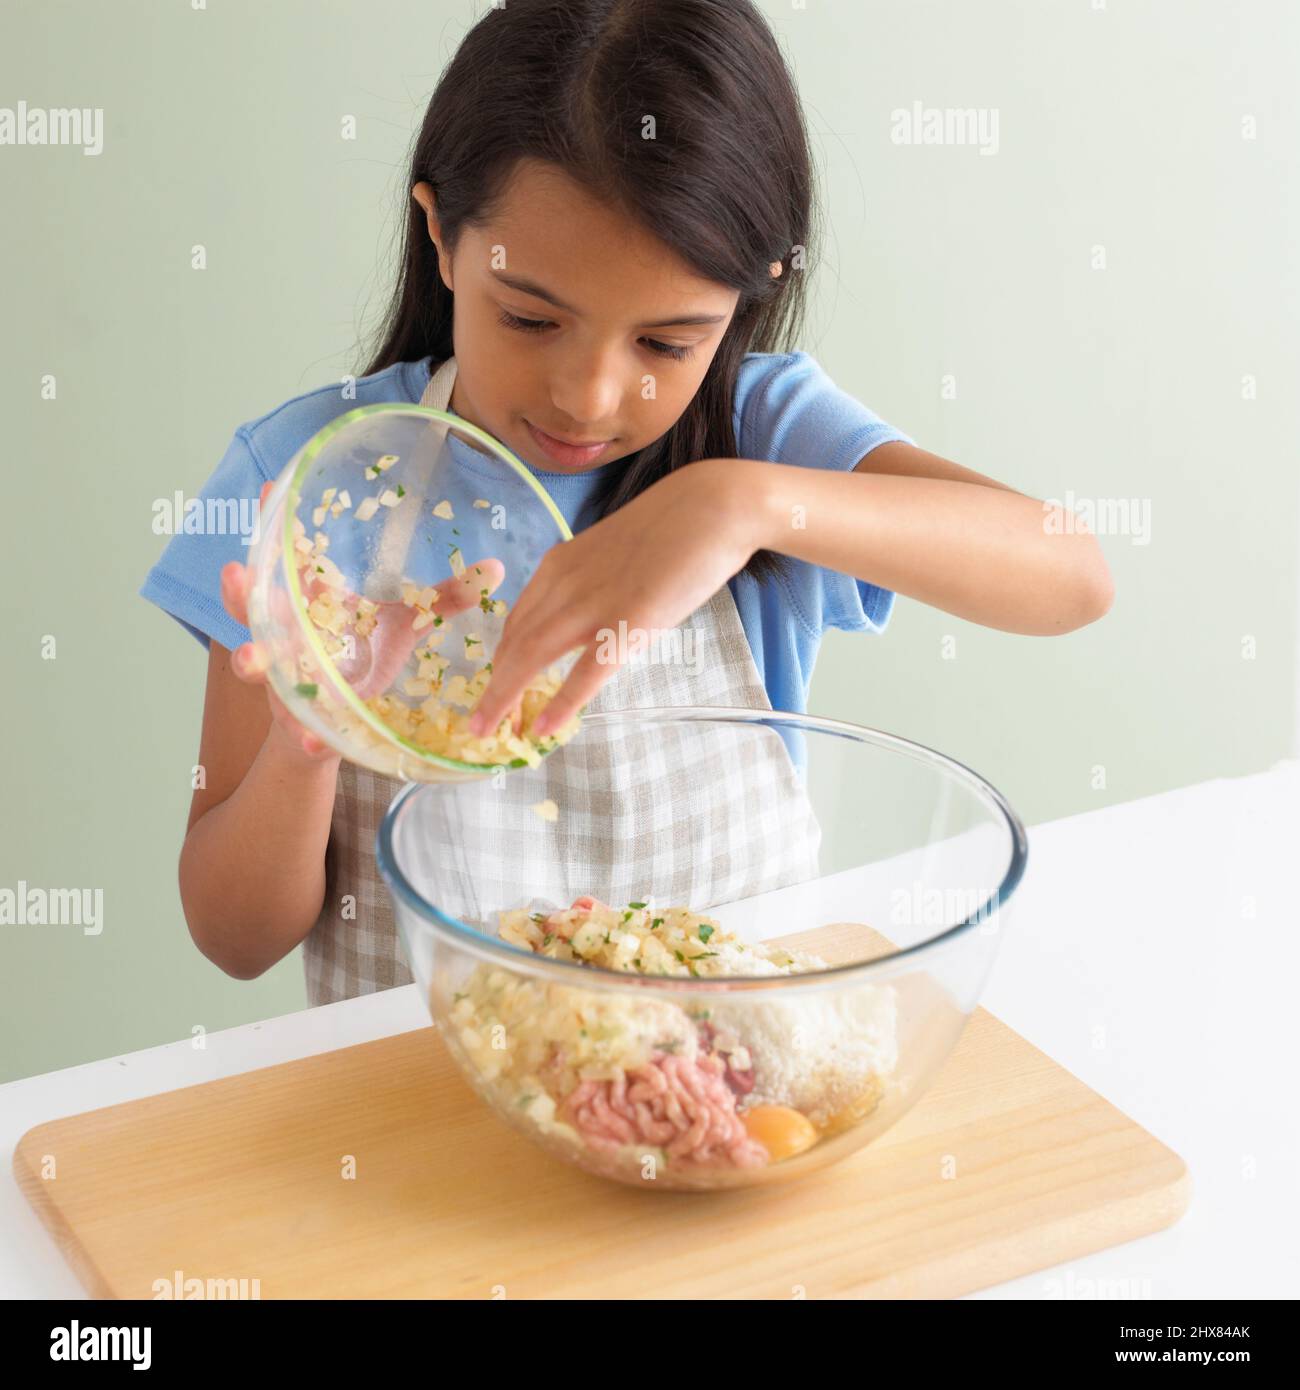 https://c8.alamy.com/comp/2HX84AK/girl-emptying-chopped-onion-into-raw-ingredients-in-large-glass-mixing-bowl-close-up-2HX84AK.jpg